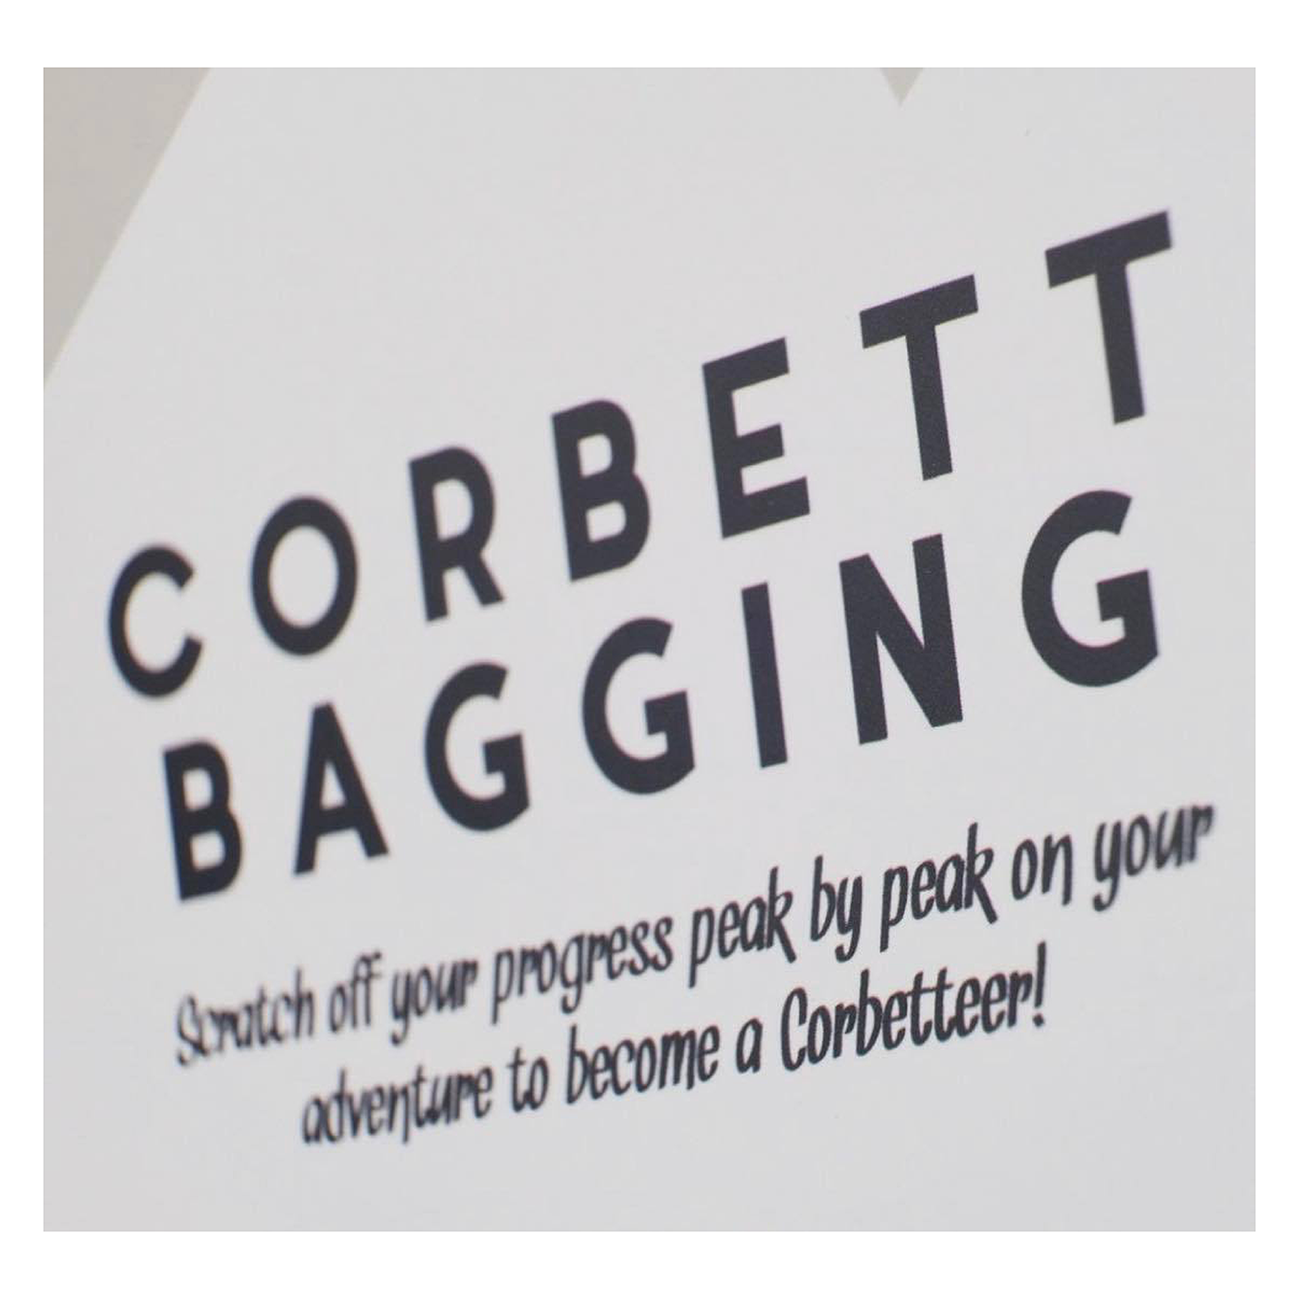 Corbett Bagging Scratch-Off Map